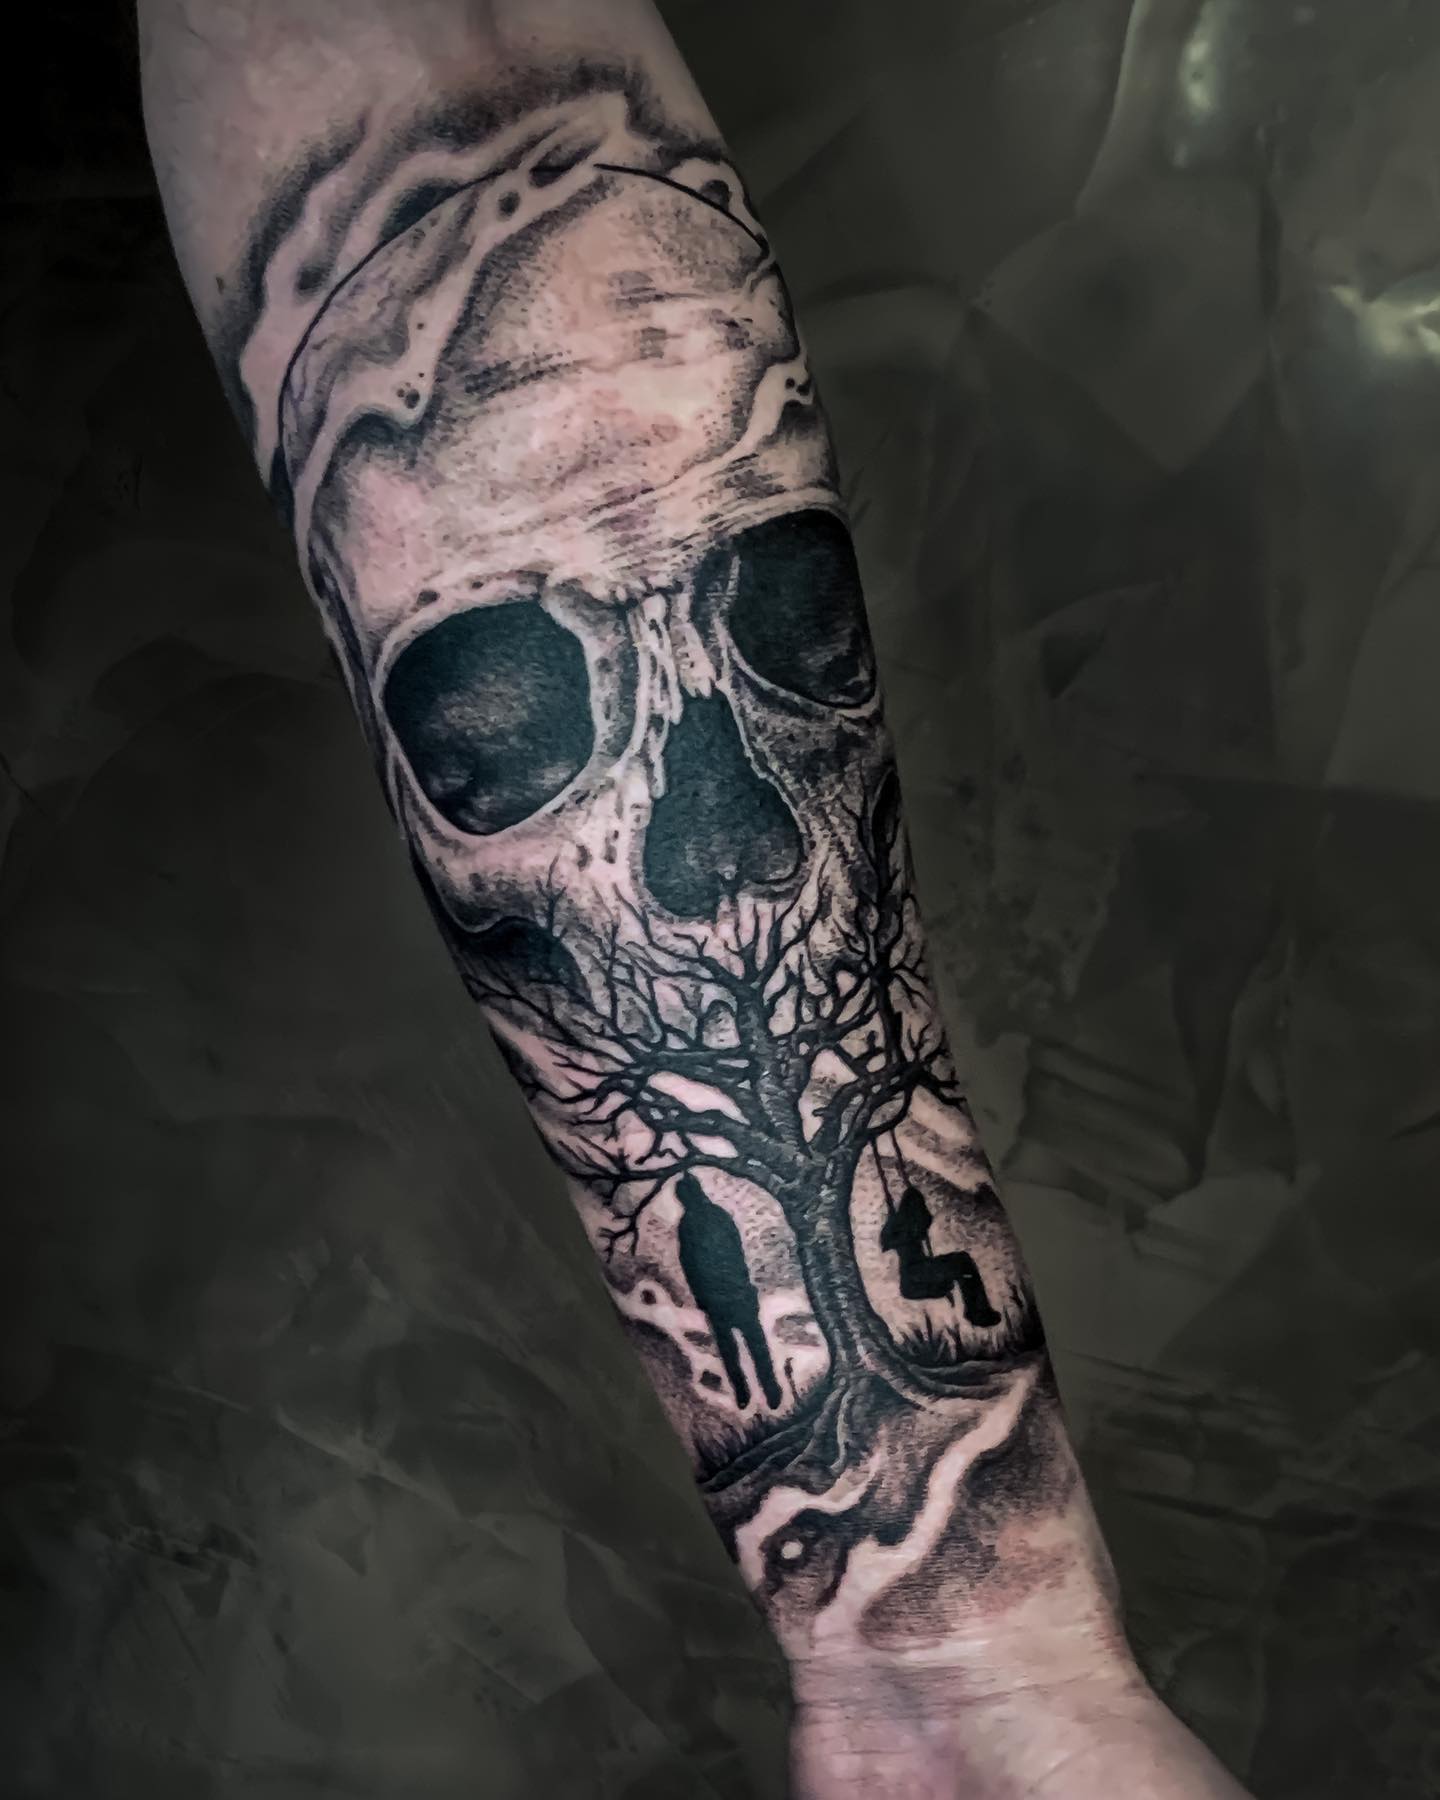 Schädel gehen immer.
Danke, Tobias 
.
Can‘t go wrong with skulls.
.
.
.

#tattoo...